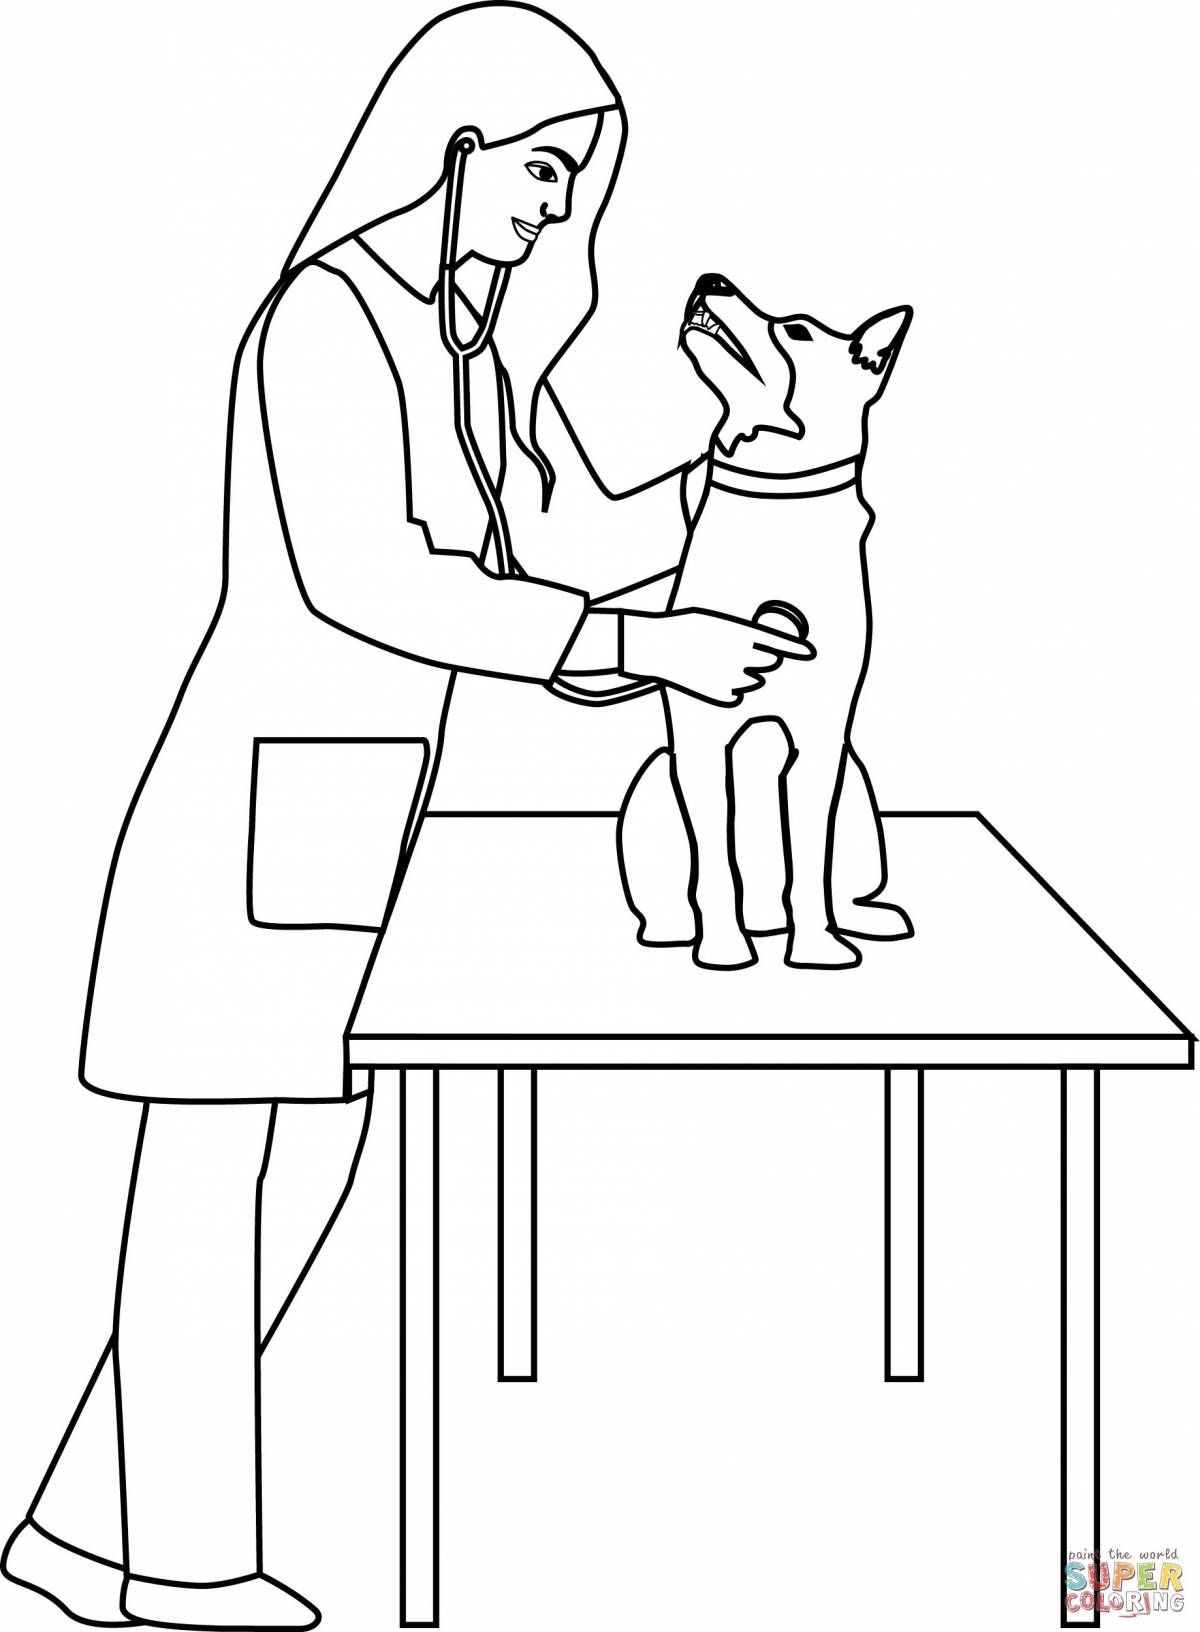 Рисунок на тему ветеринар